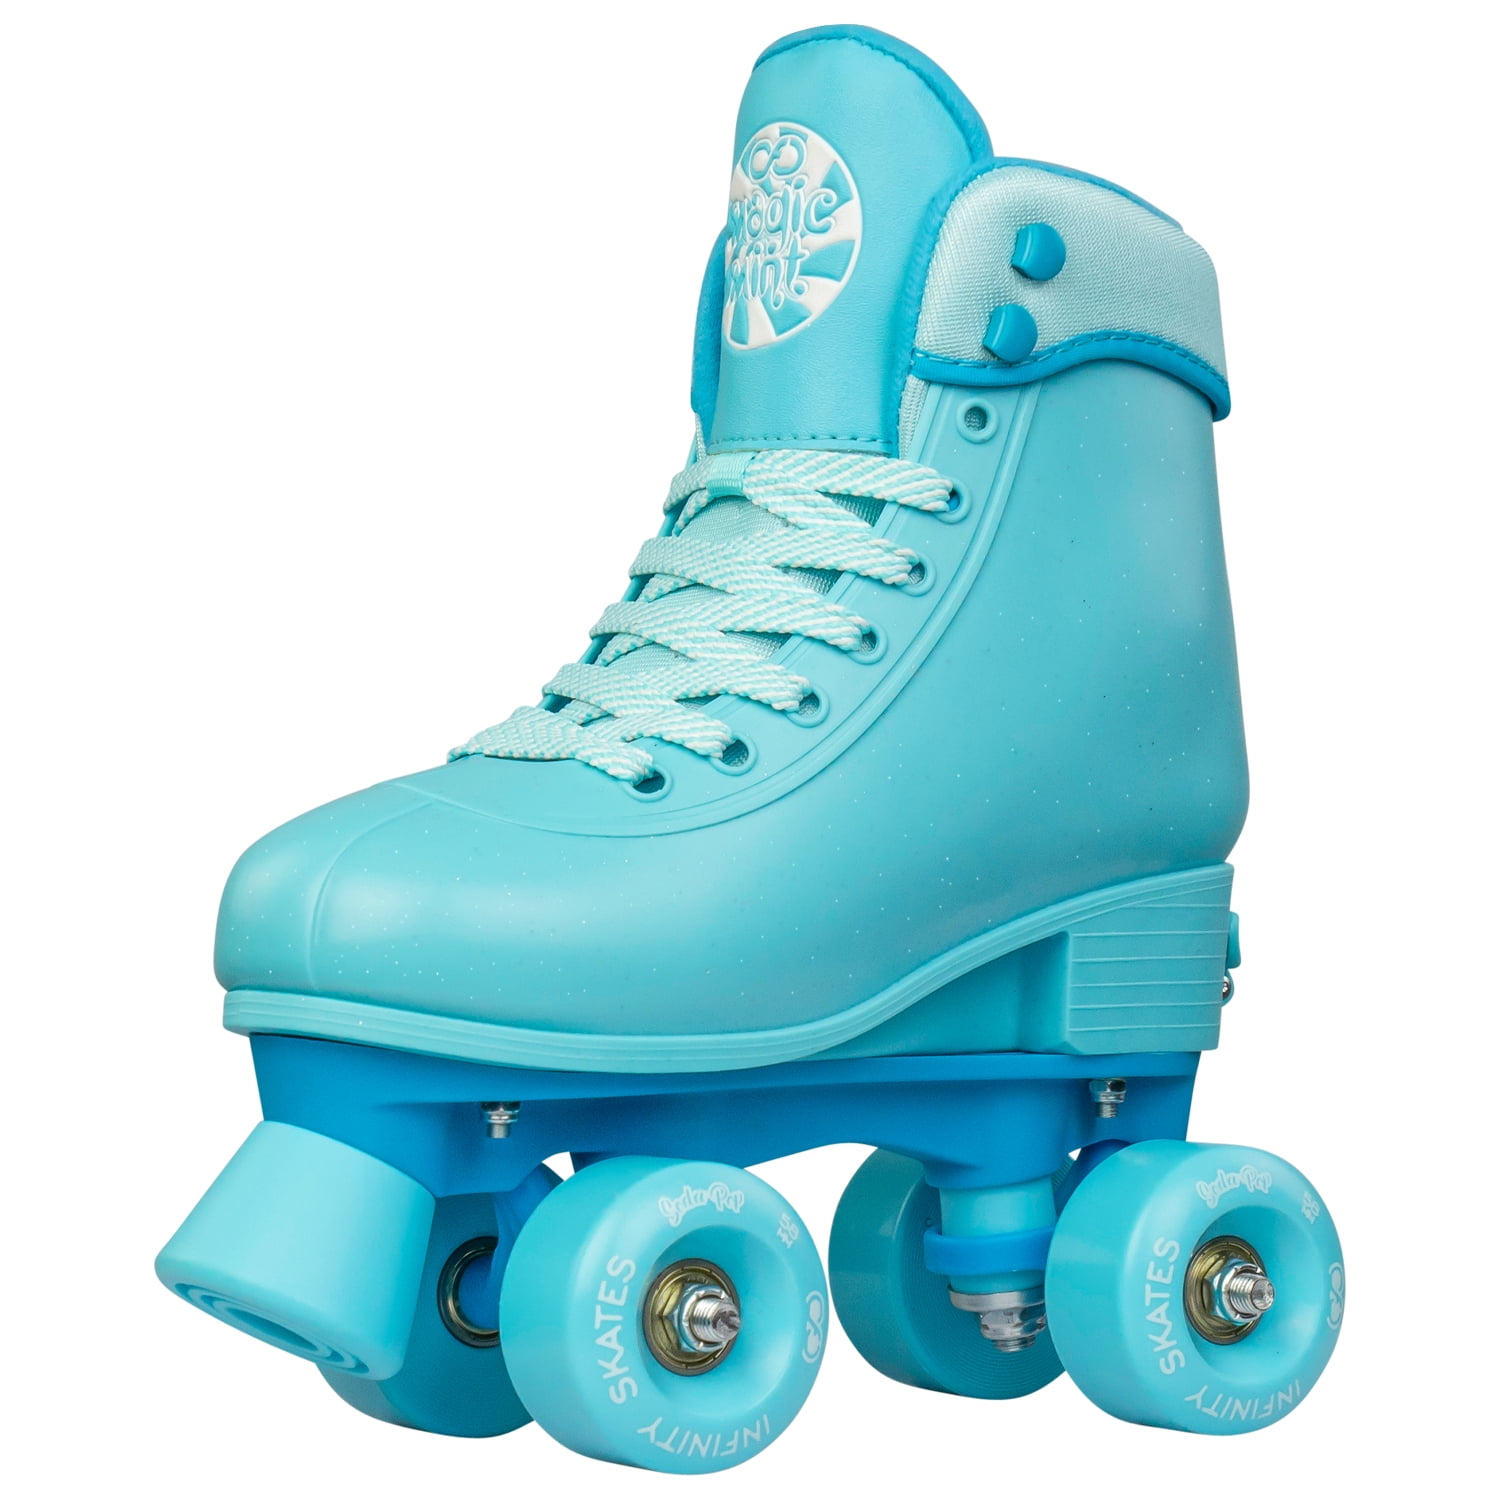 kaos Integrere Bluebell Crazy Skates Soda Pop Adjustable Roller Skates for Girls and Boys - Adjusts  to fit 4 shoe sizes - Walmart.com